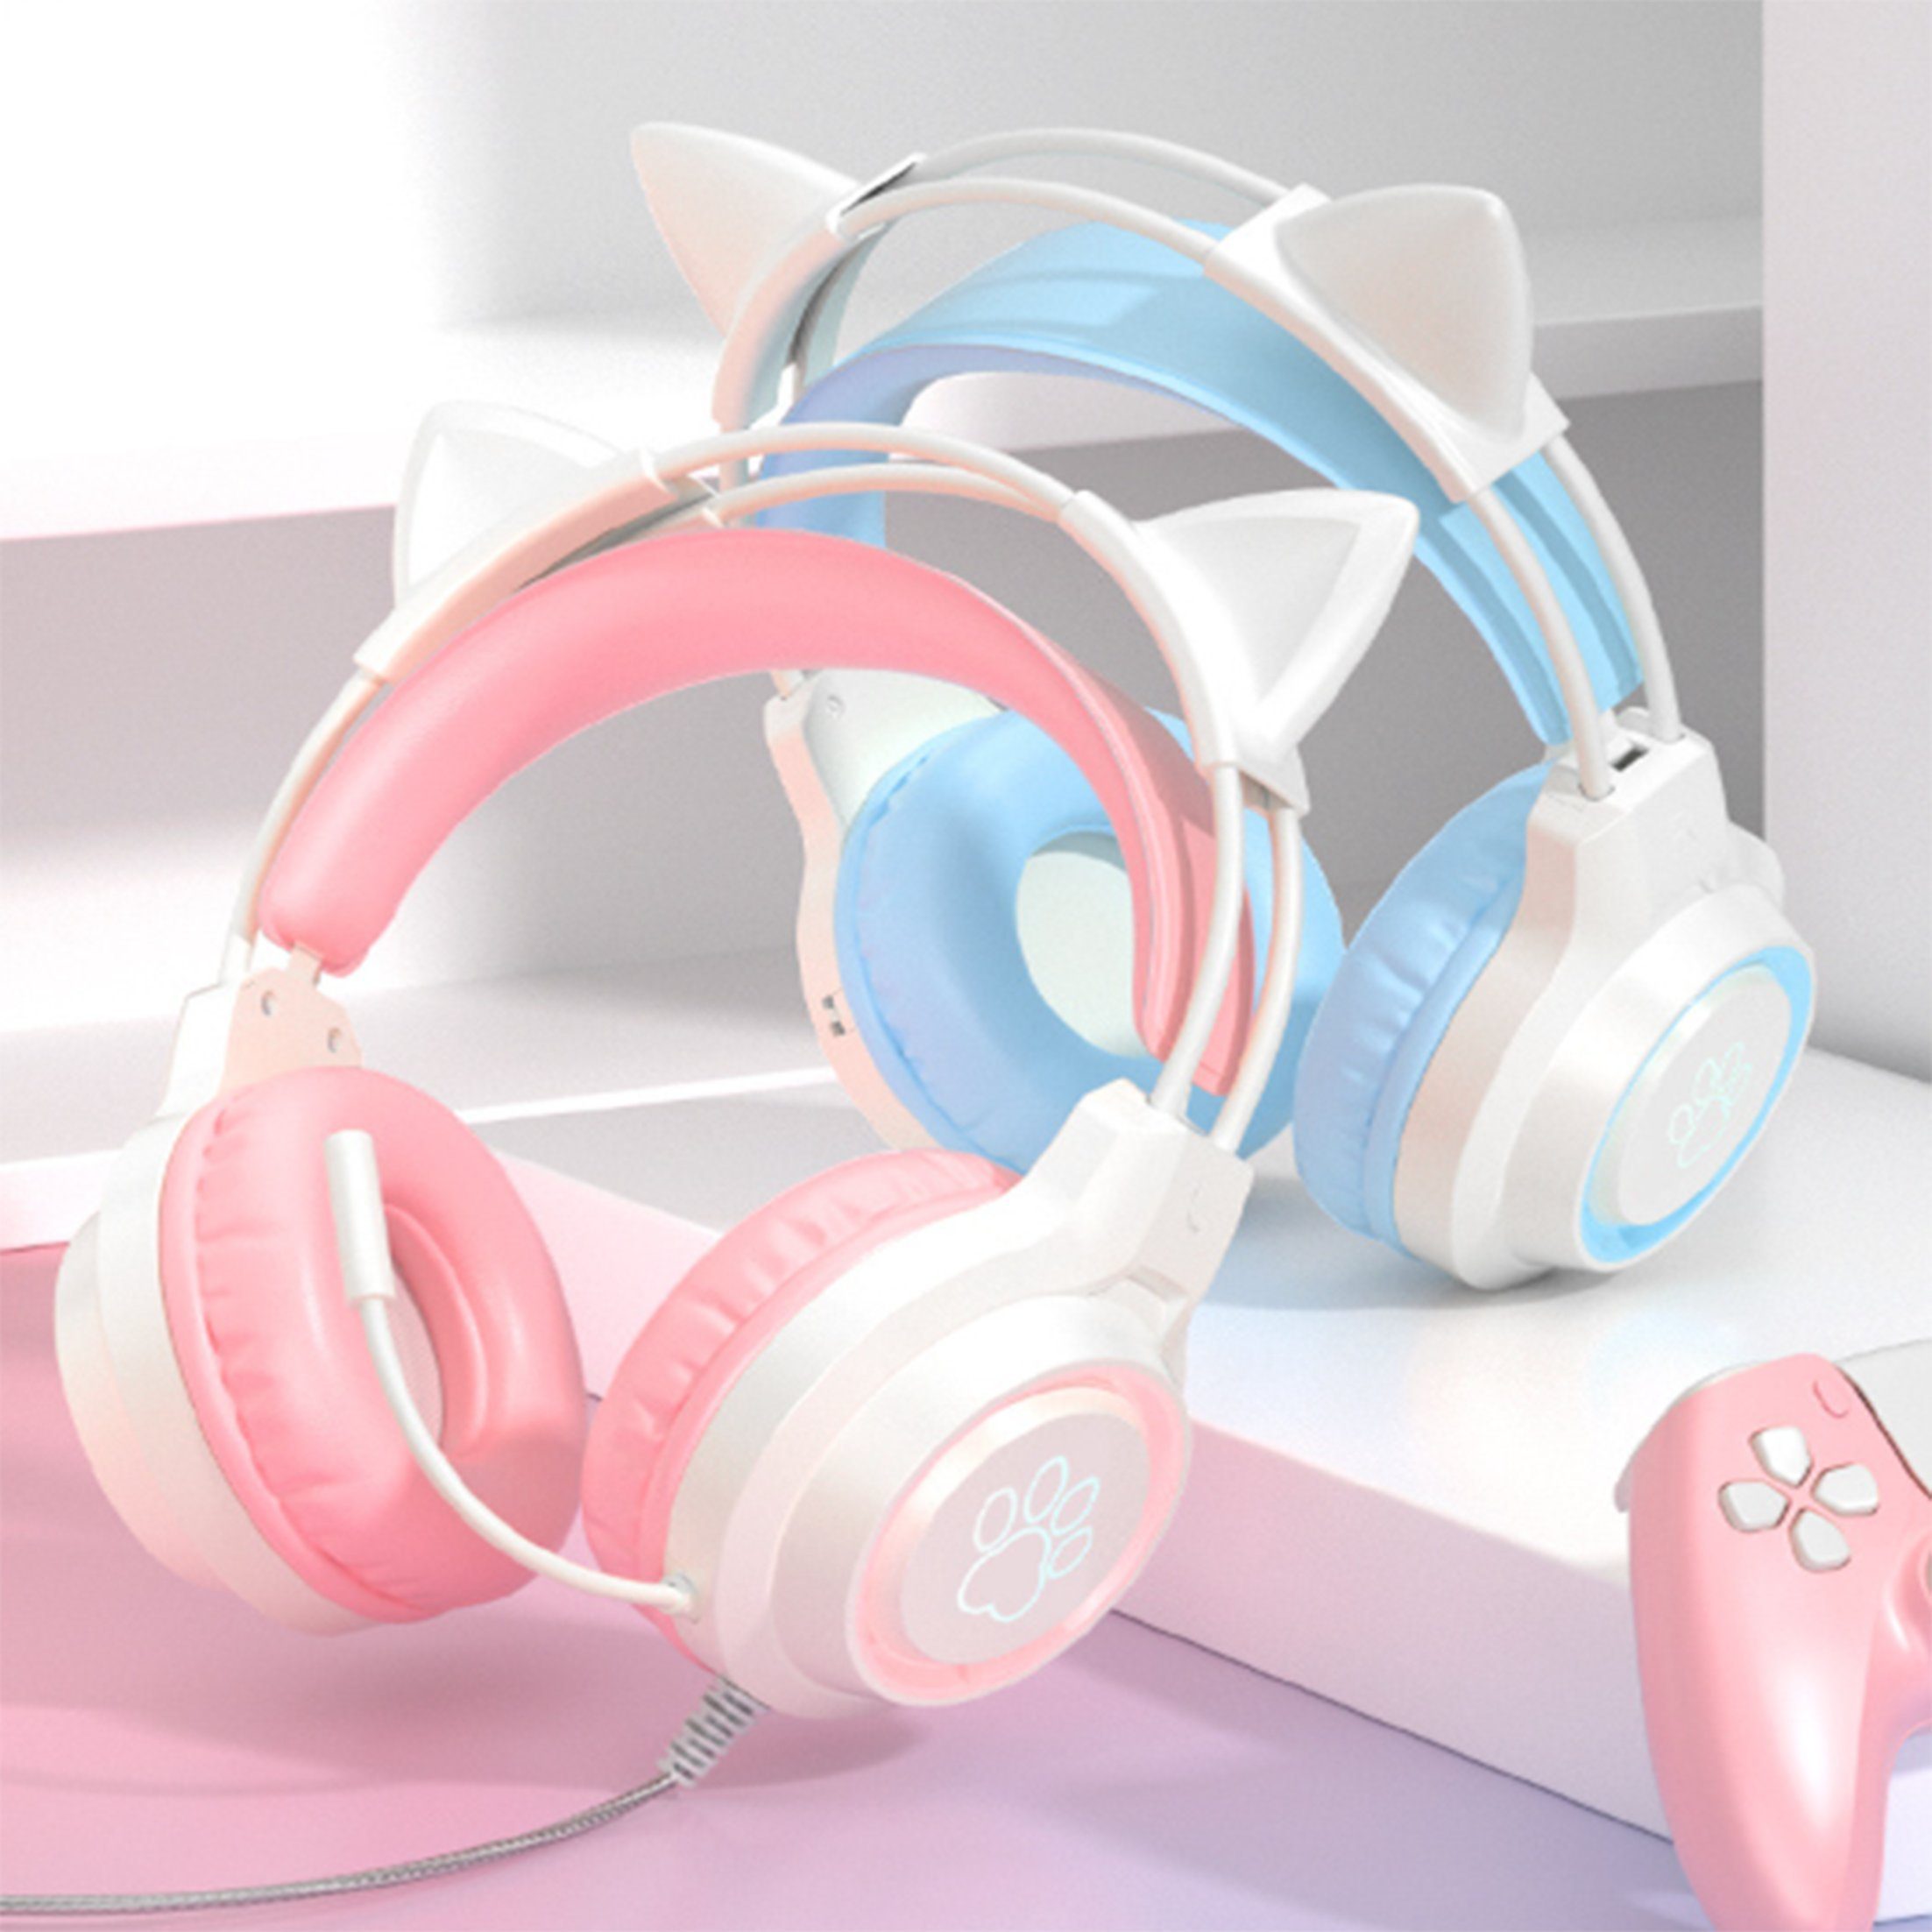 Katzenohren,Geräuschunterdrückung Headset,Gaming-Headset Over-Ear-Kopfhörer KINSI Rosa mit